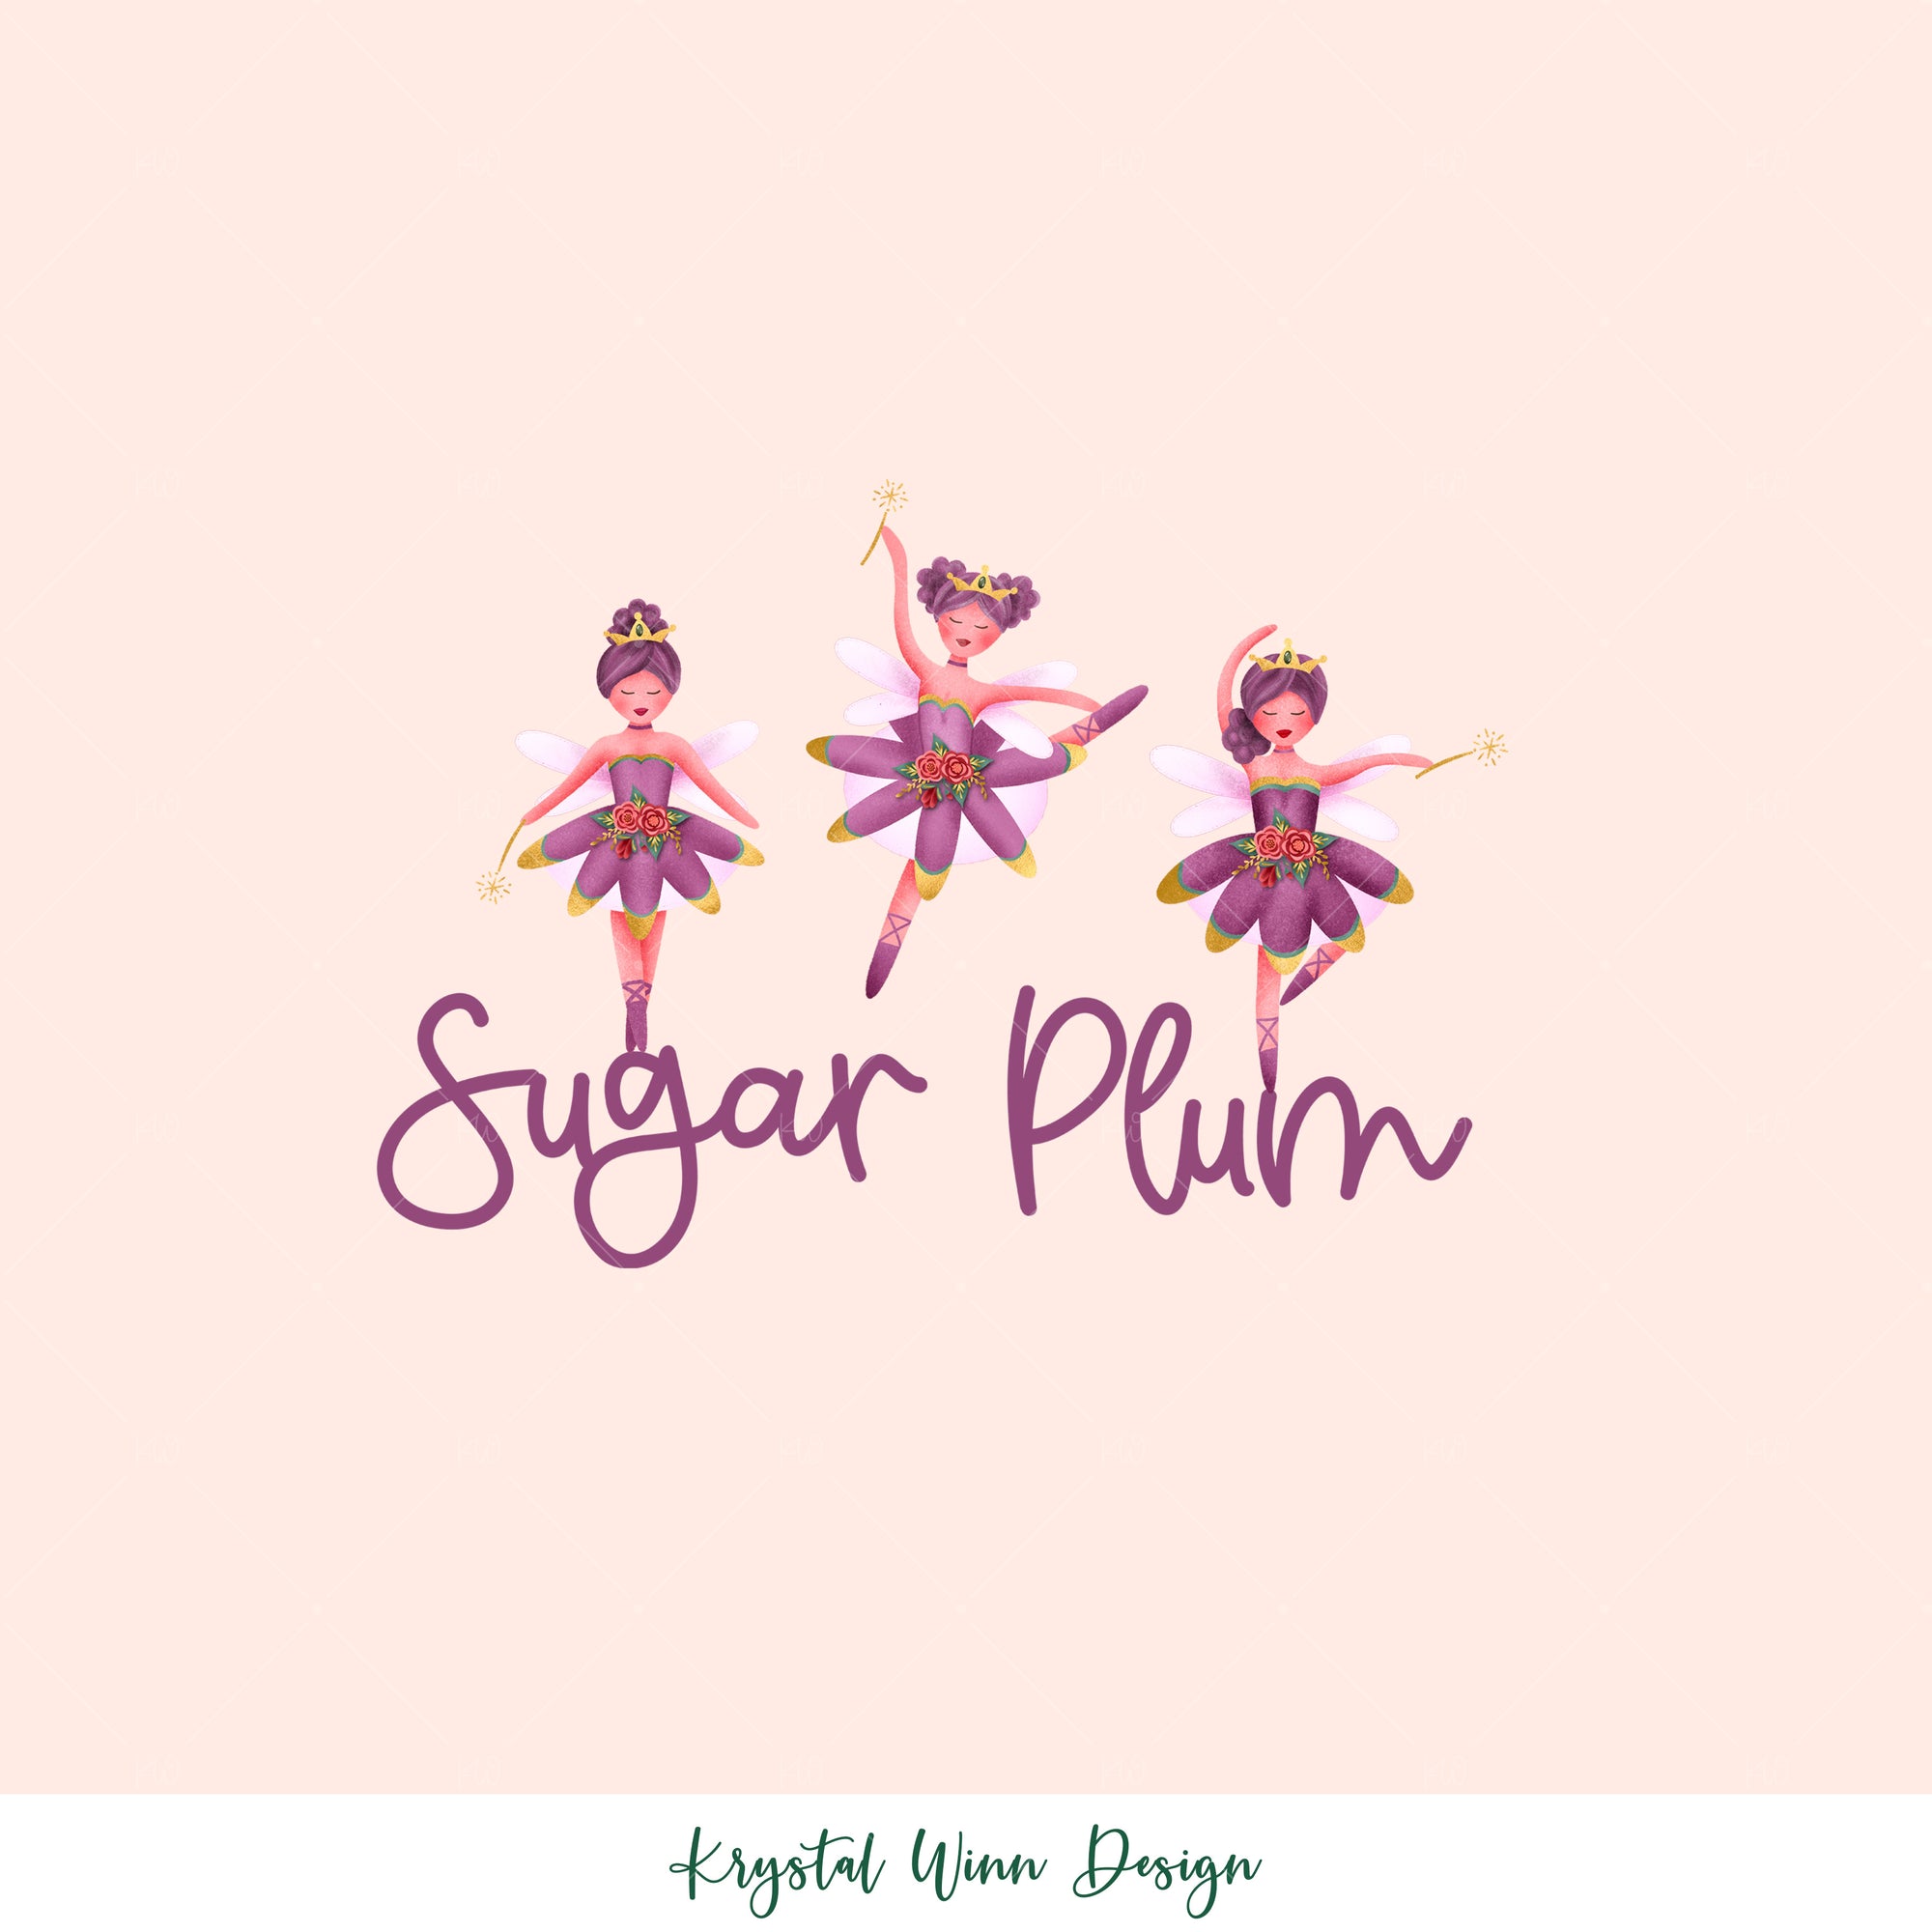 Sugar Plum 2 PANEL